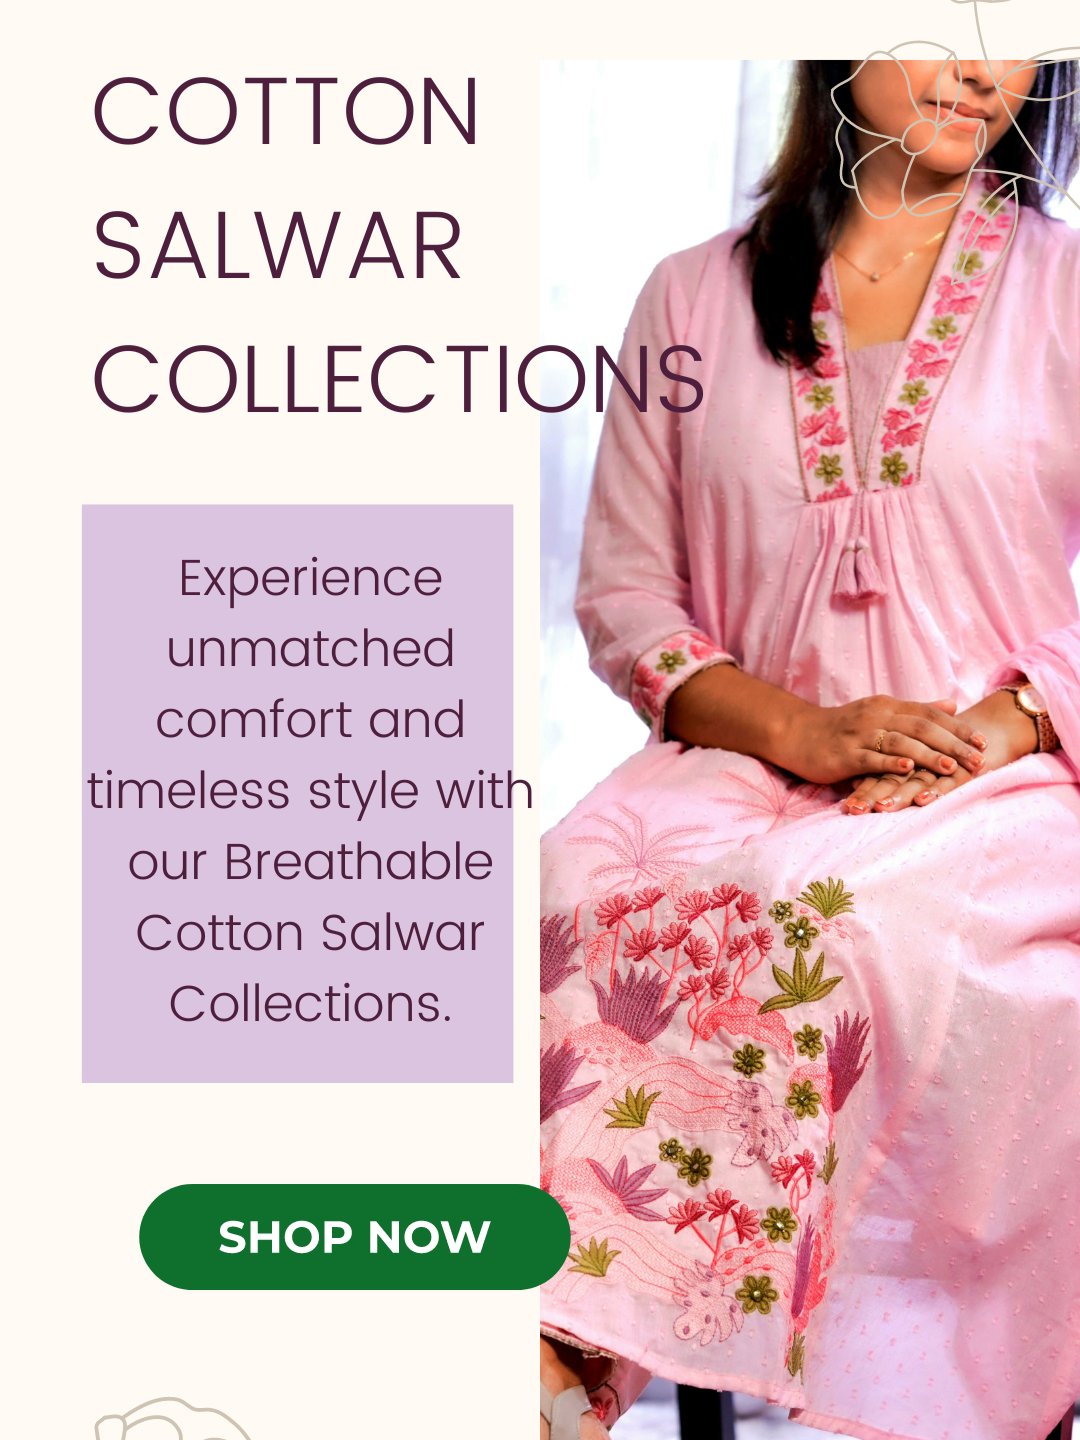 Cotton salwar suits